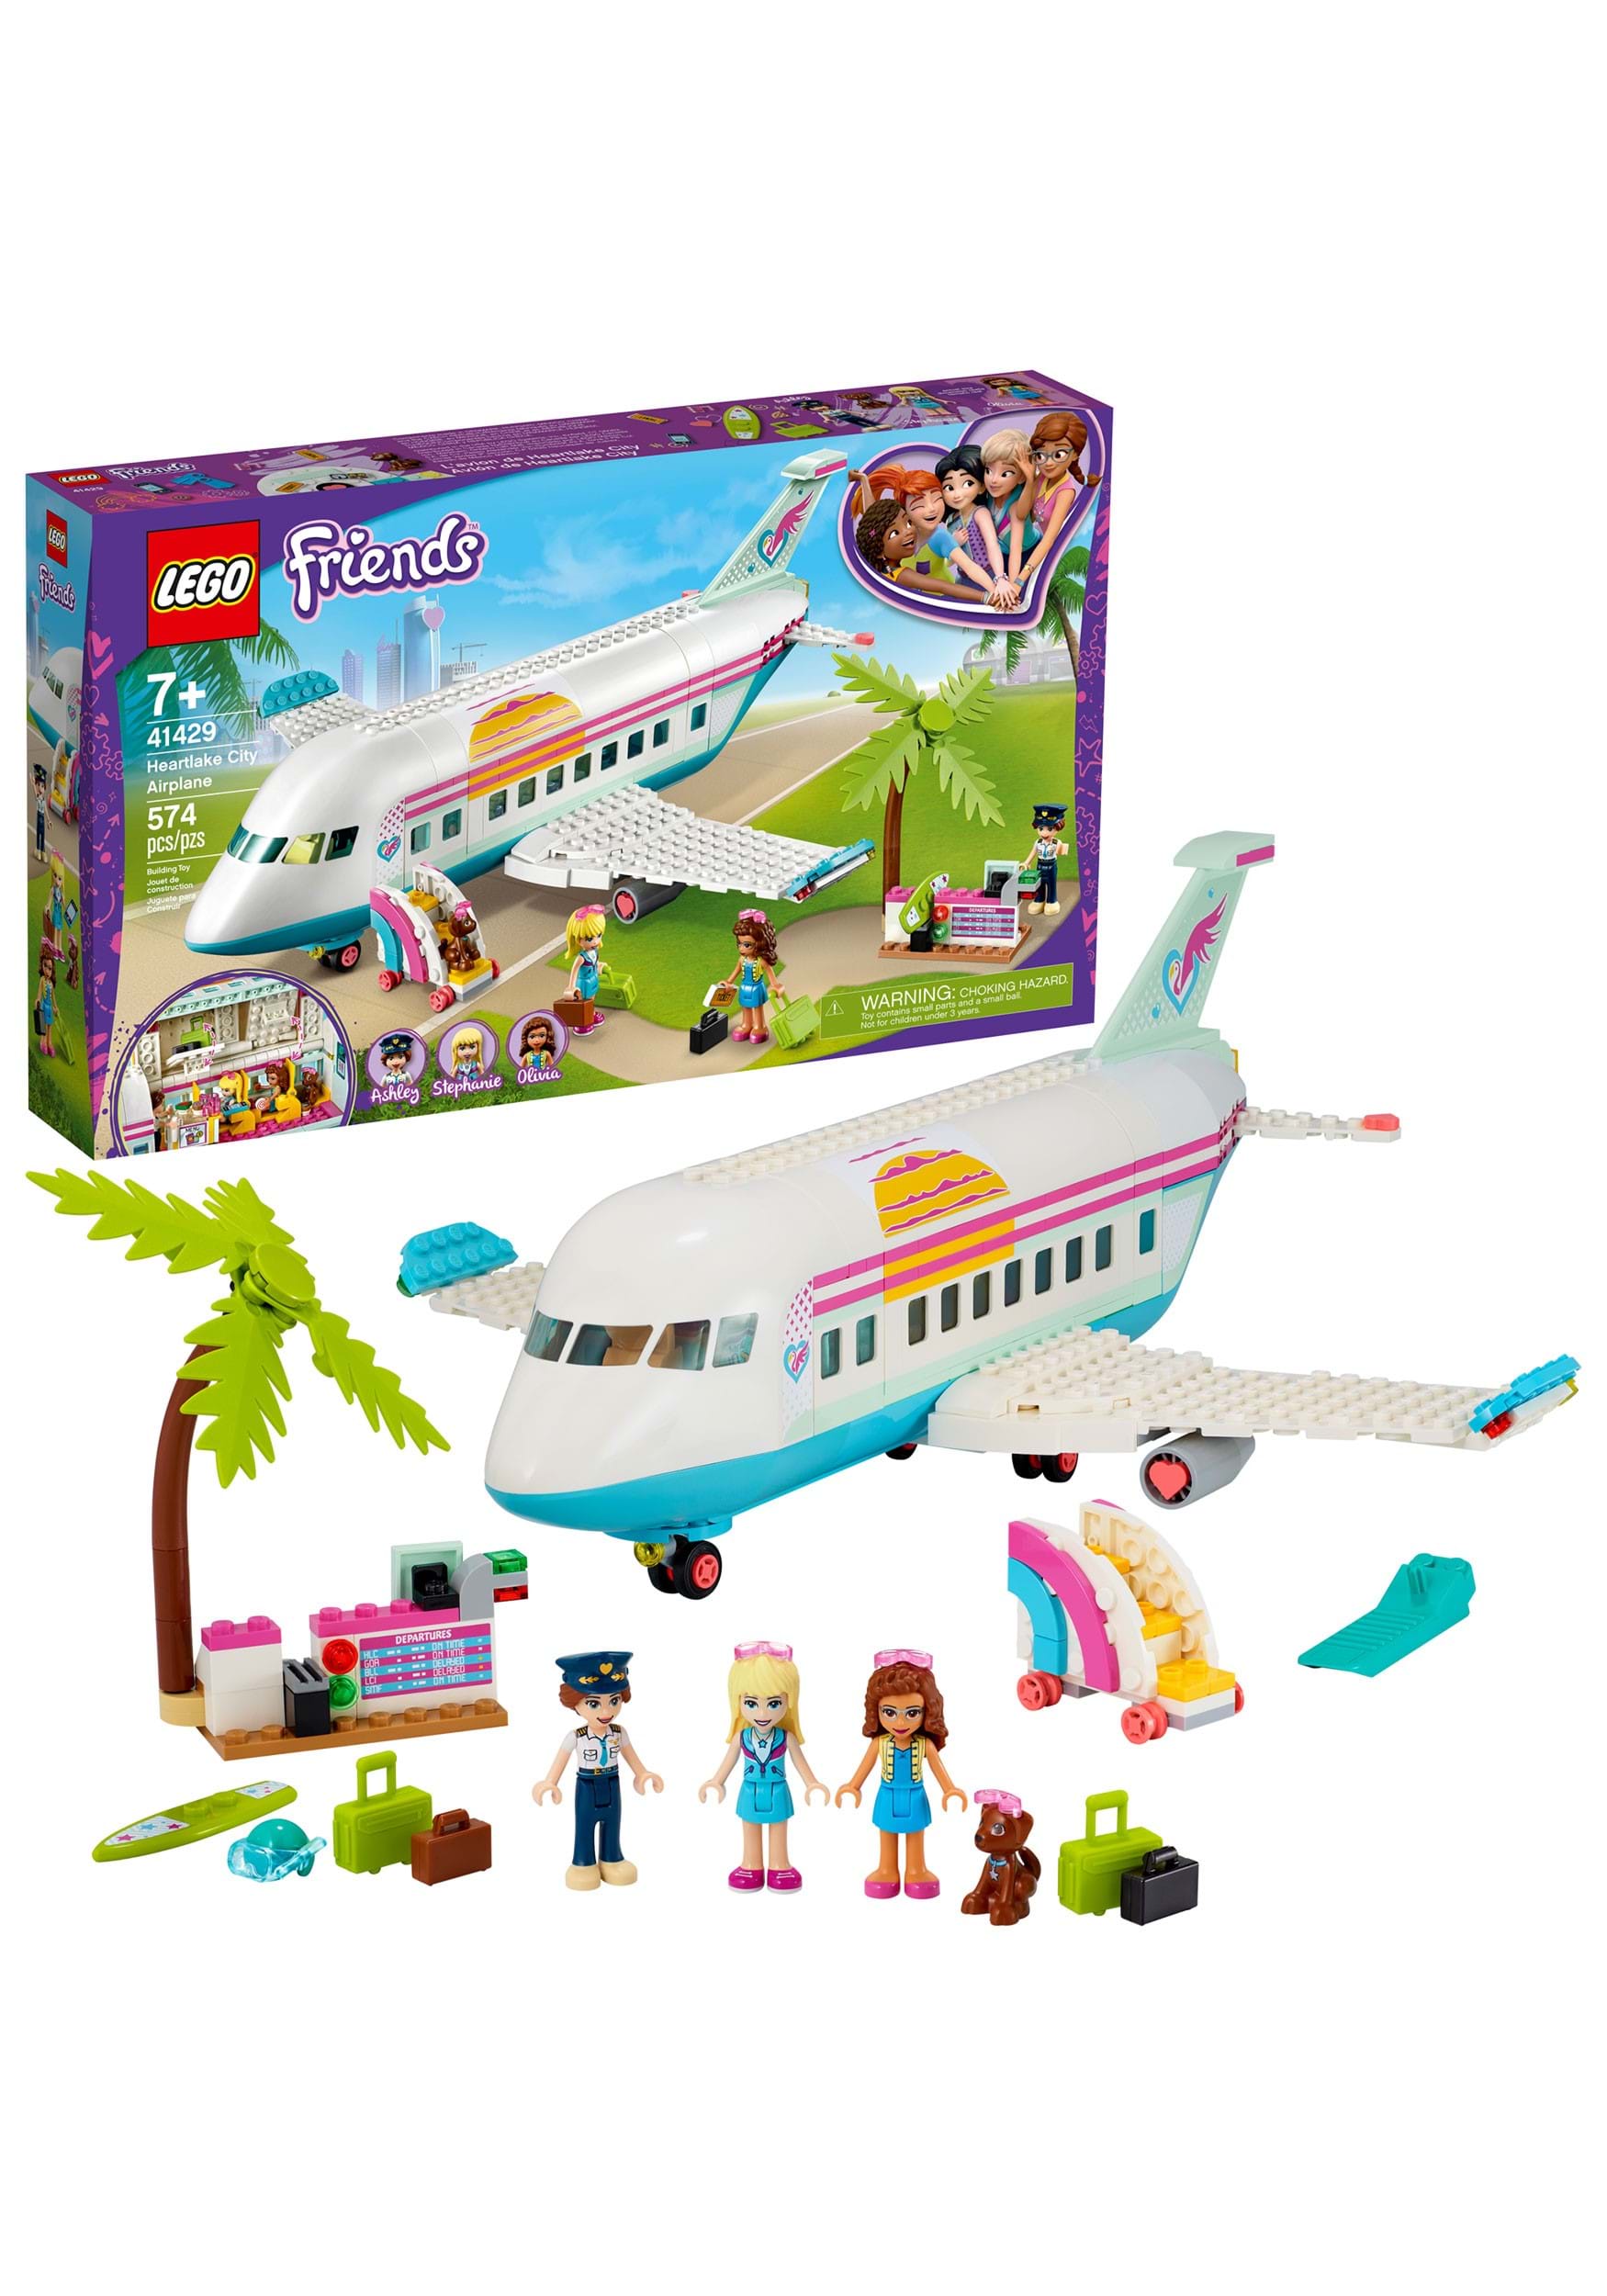 LEGO Friends Heartlake City Airplane Playset